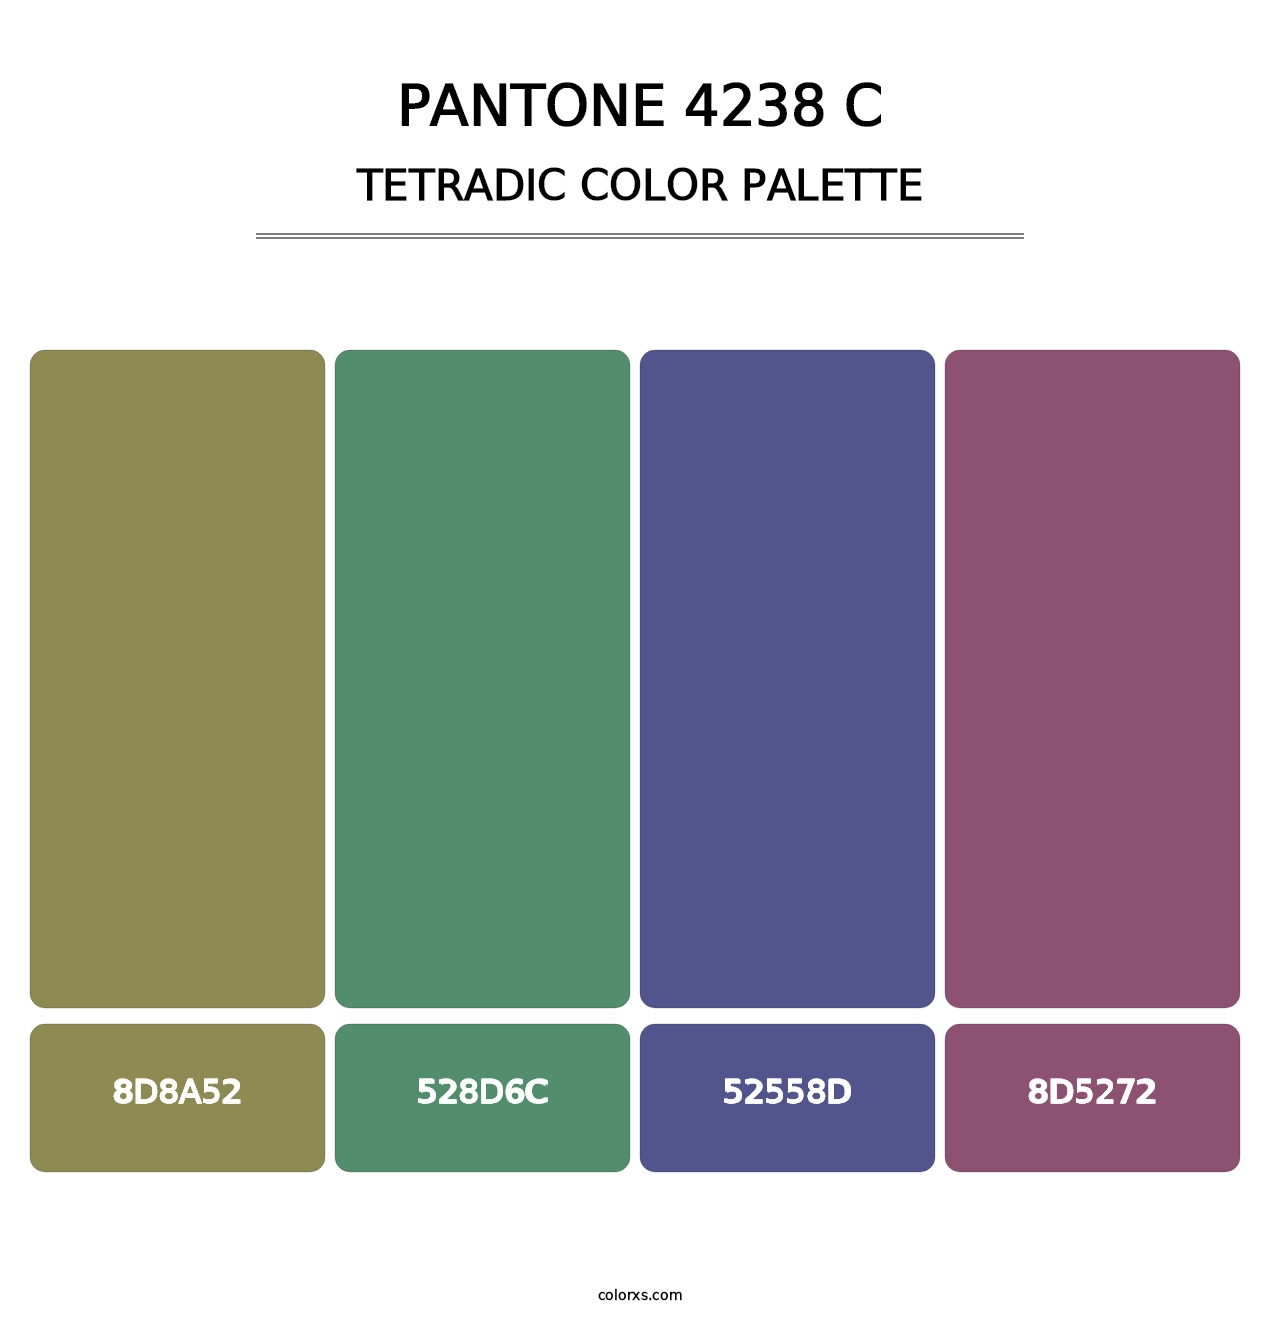 PANTONE 4238 C - Tetradic Color Palette